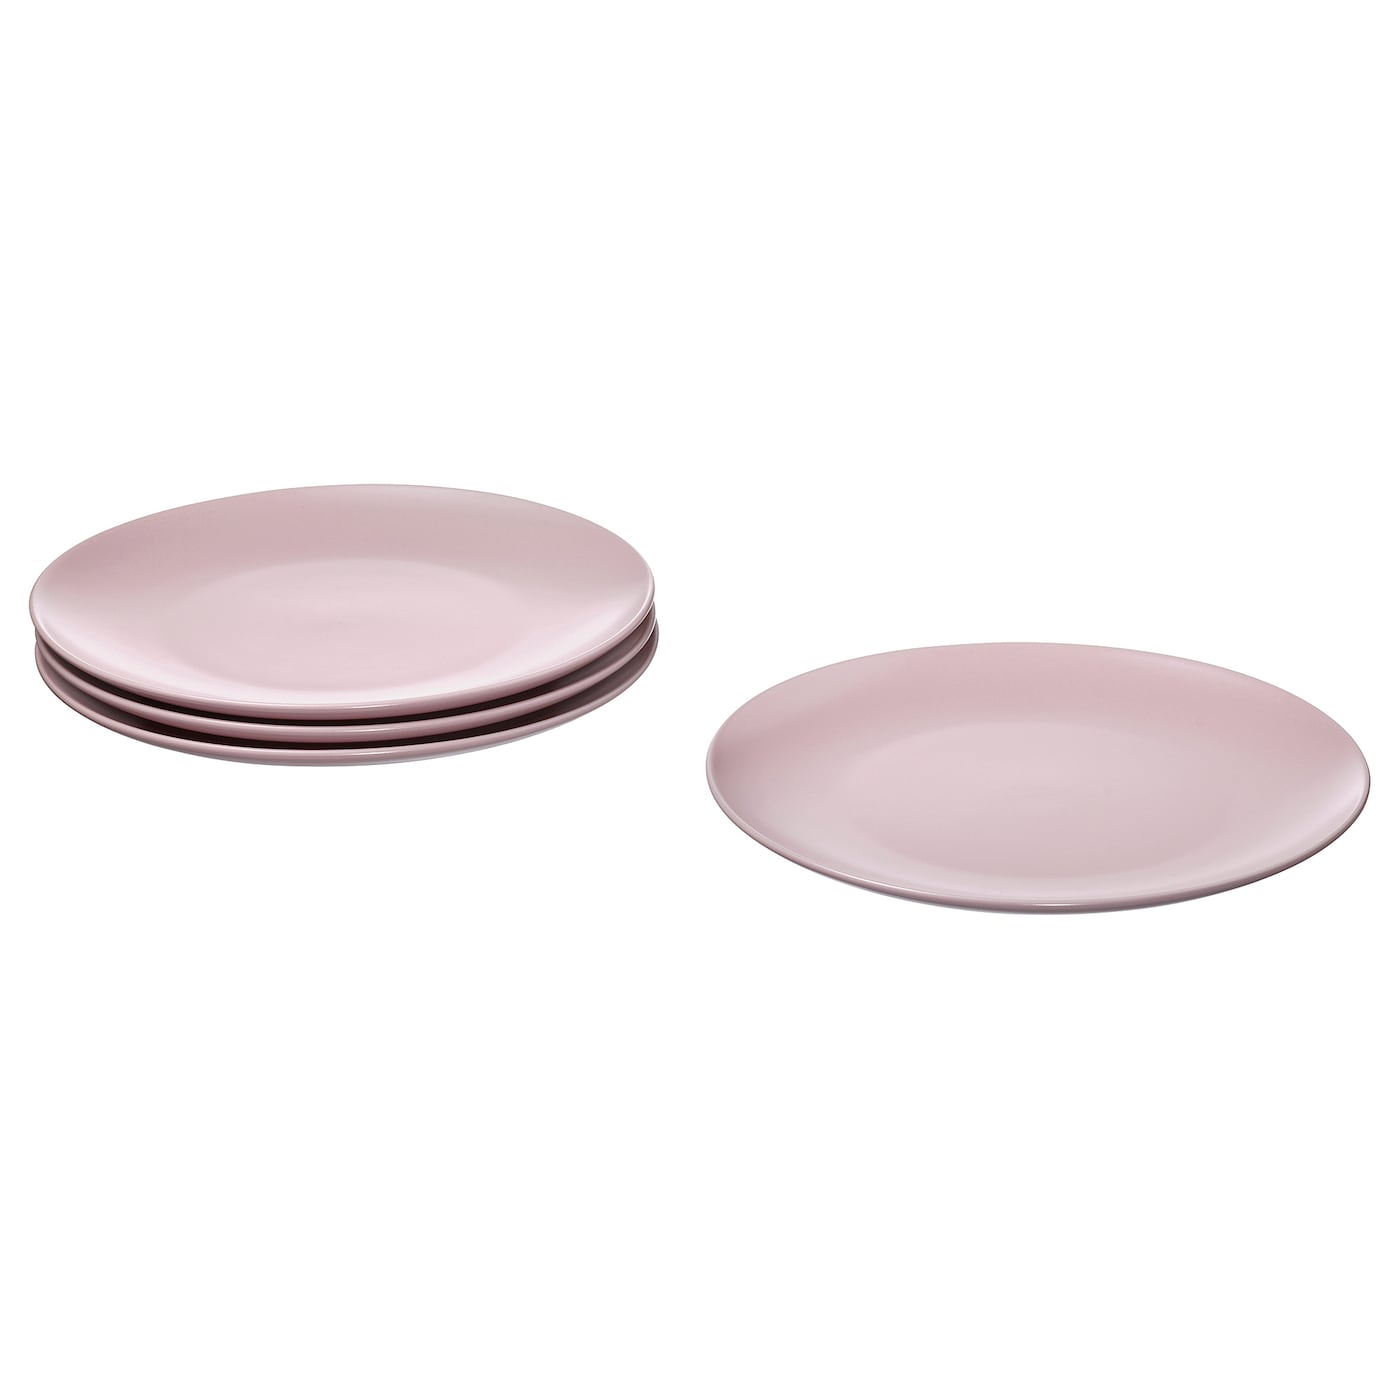 Набор тарелок, 4 шт. - IKEA FÄRGKLAR/FARGKLAR, 26 см, светло-розовый, ФЭРГКЛАР ИКЕА